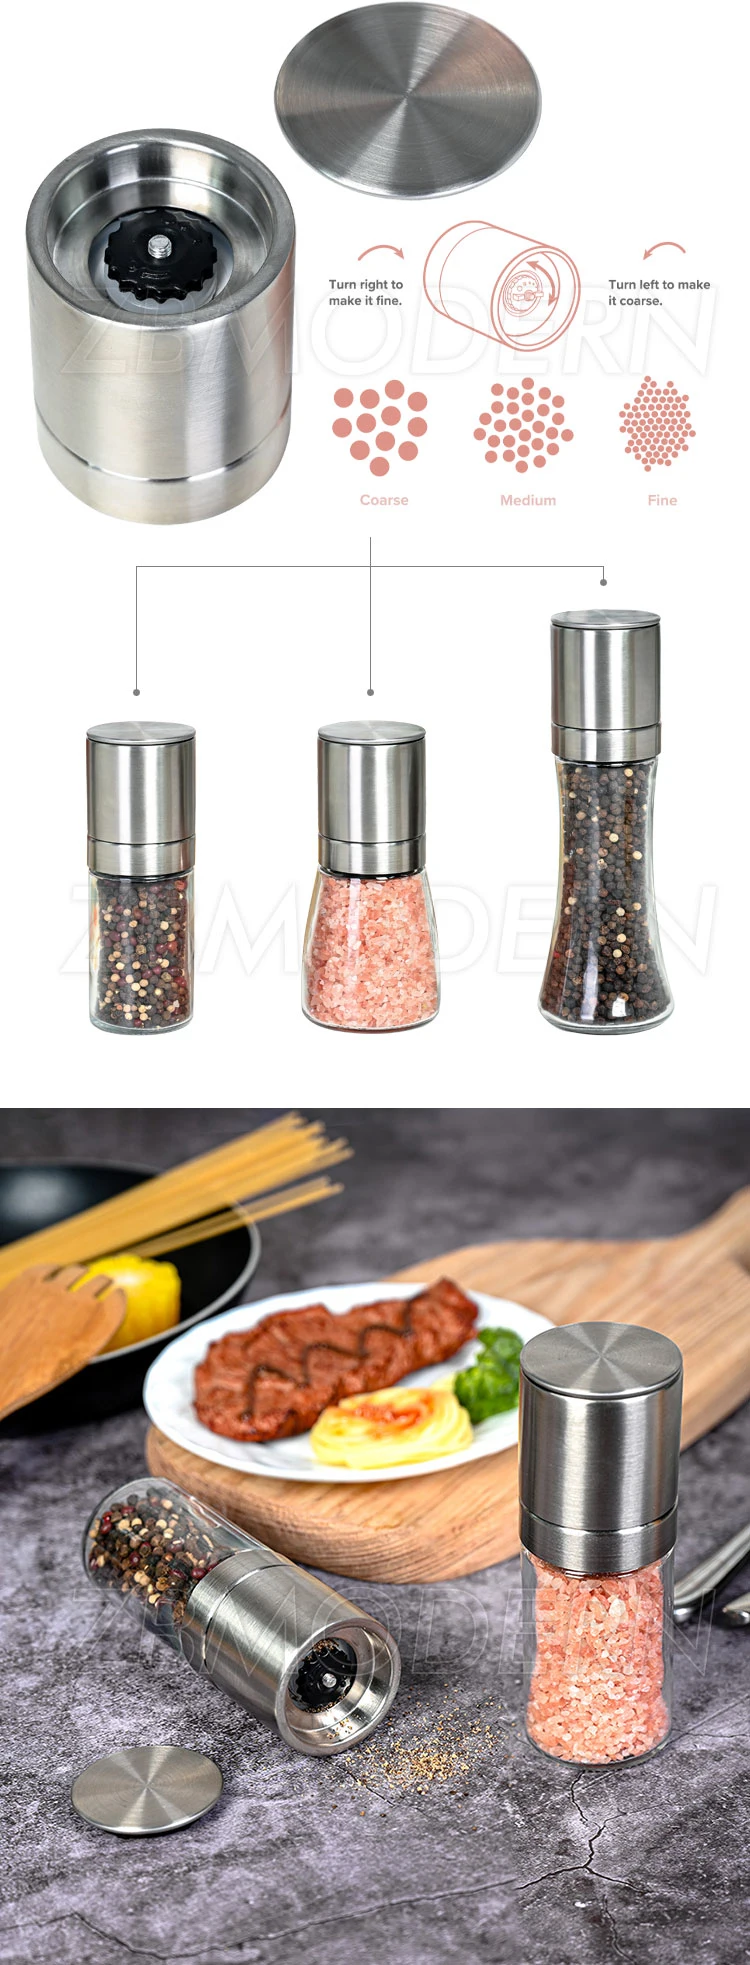 Wholesale Best Seller Manual Pepper Grinder and Salt Premium Glass Body with Adjustable Stainless Steel Ceramic Spice Grinder